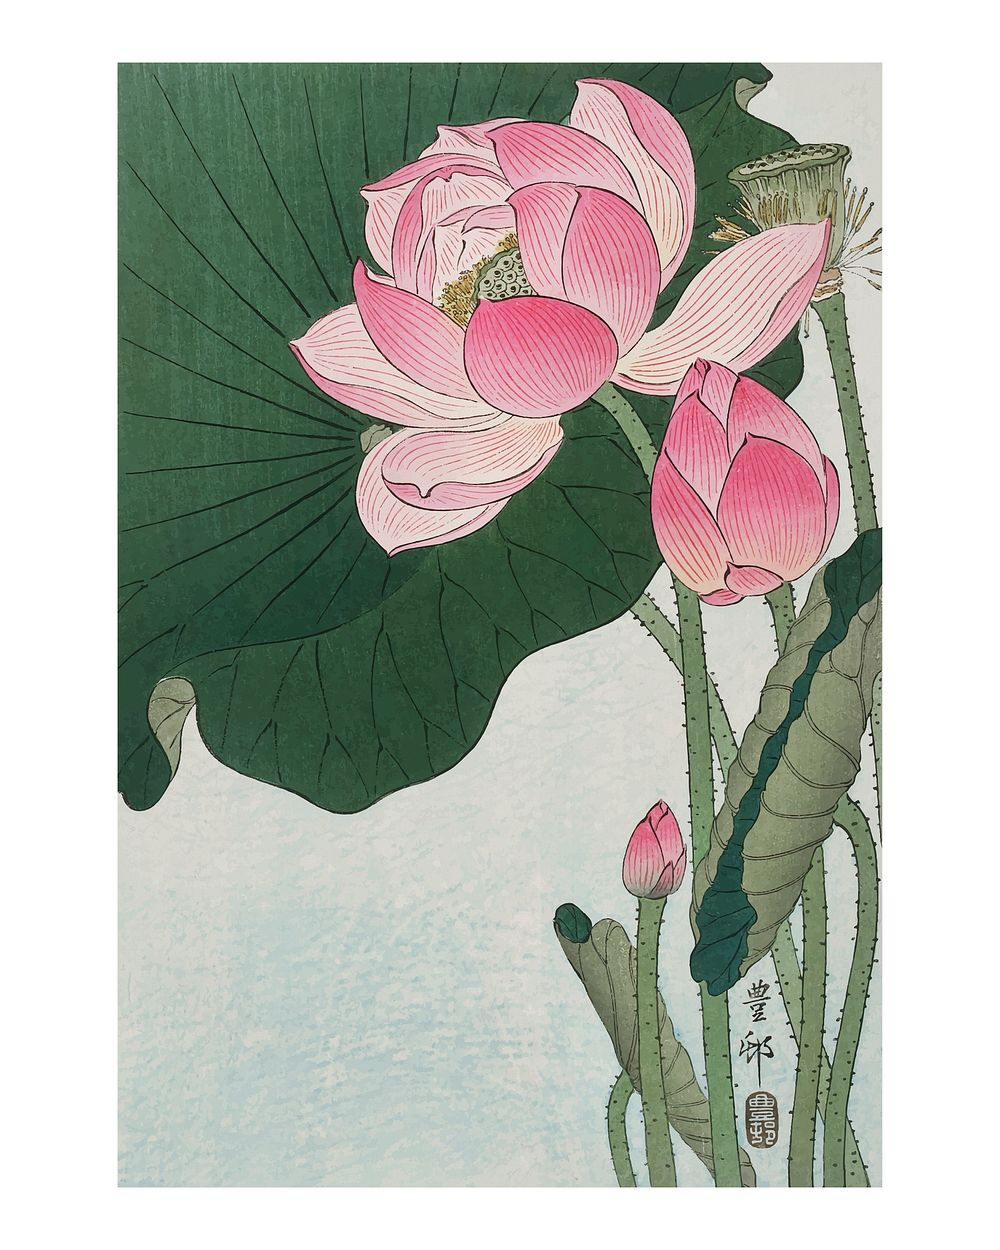 Blooming lotus vintage illustration wall art print and poster design remix from original artwork by Ohara Koson. Digitally…